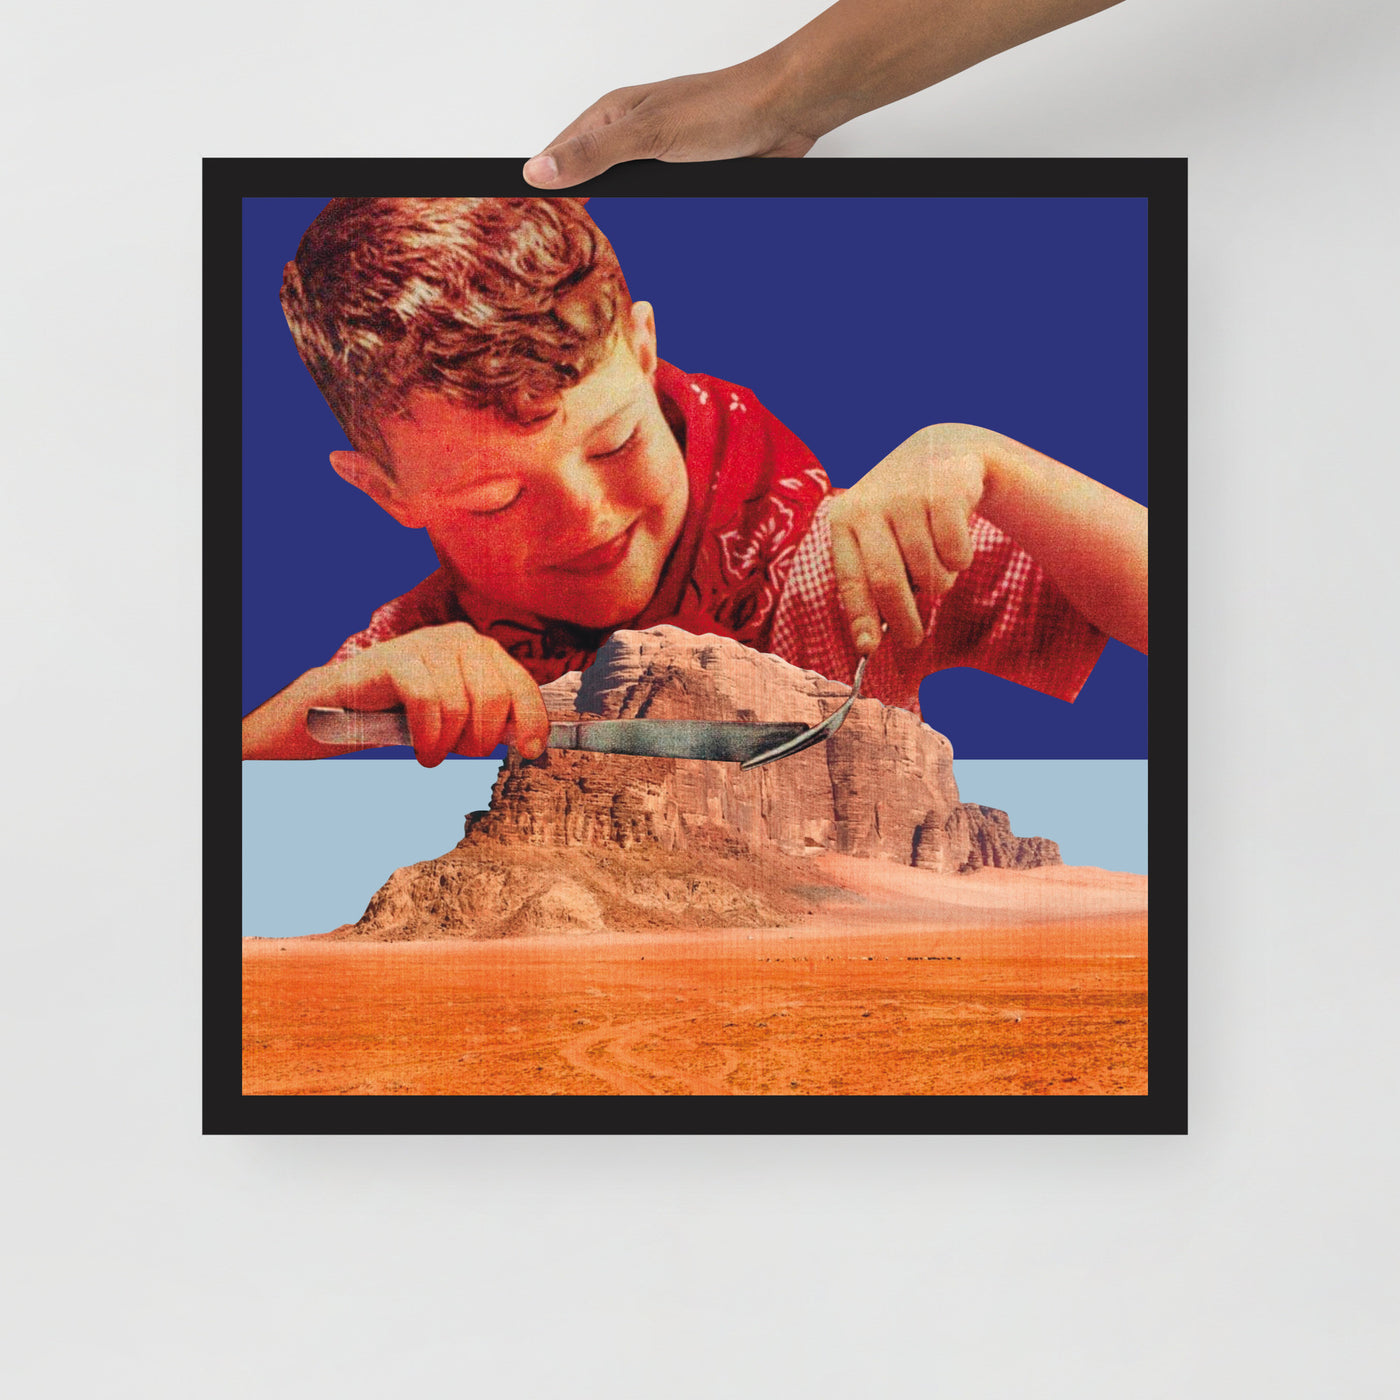 Gerahmtes Bild Kollektion "Kitchen Art" - Junge isst Canyon